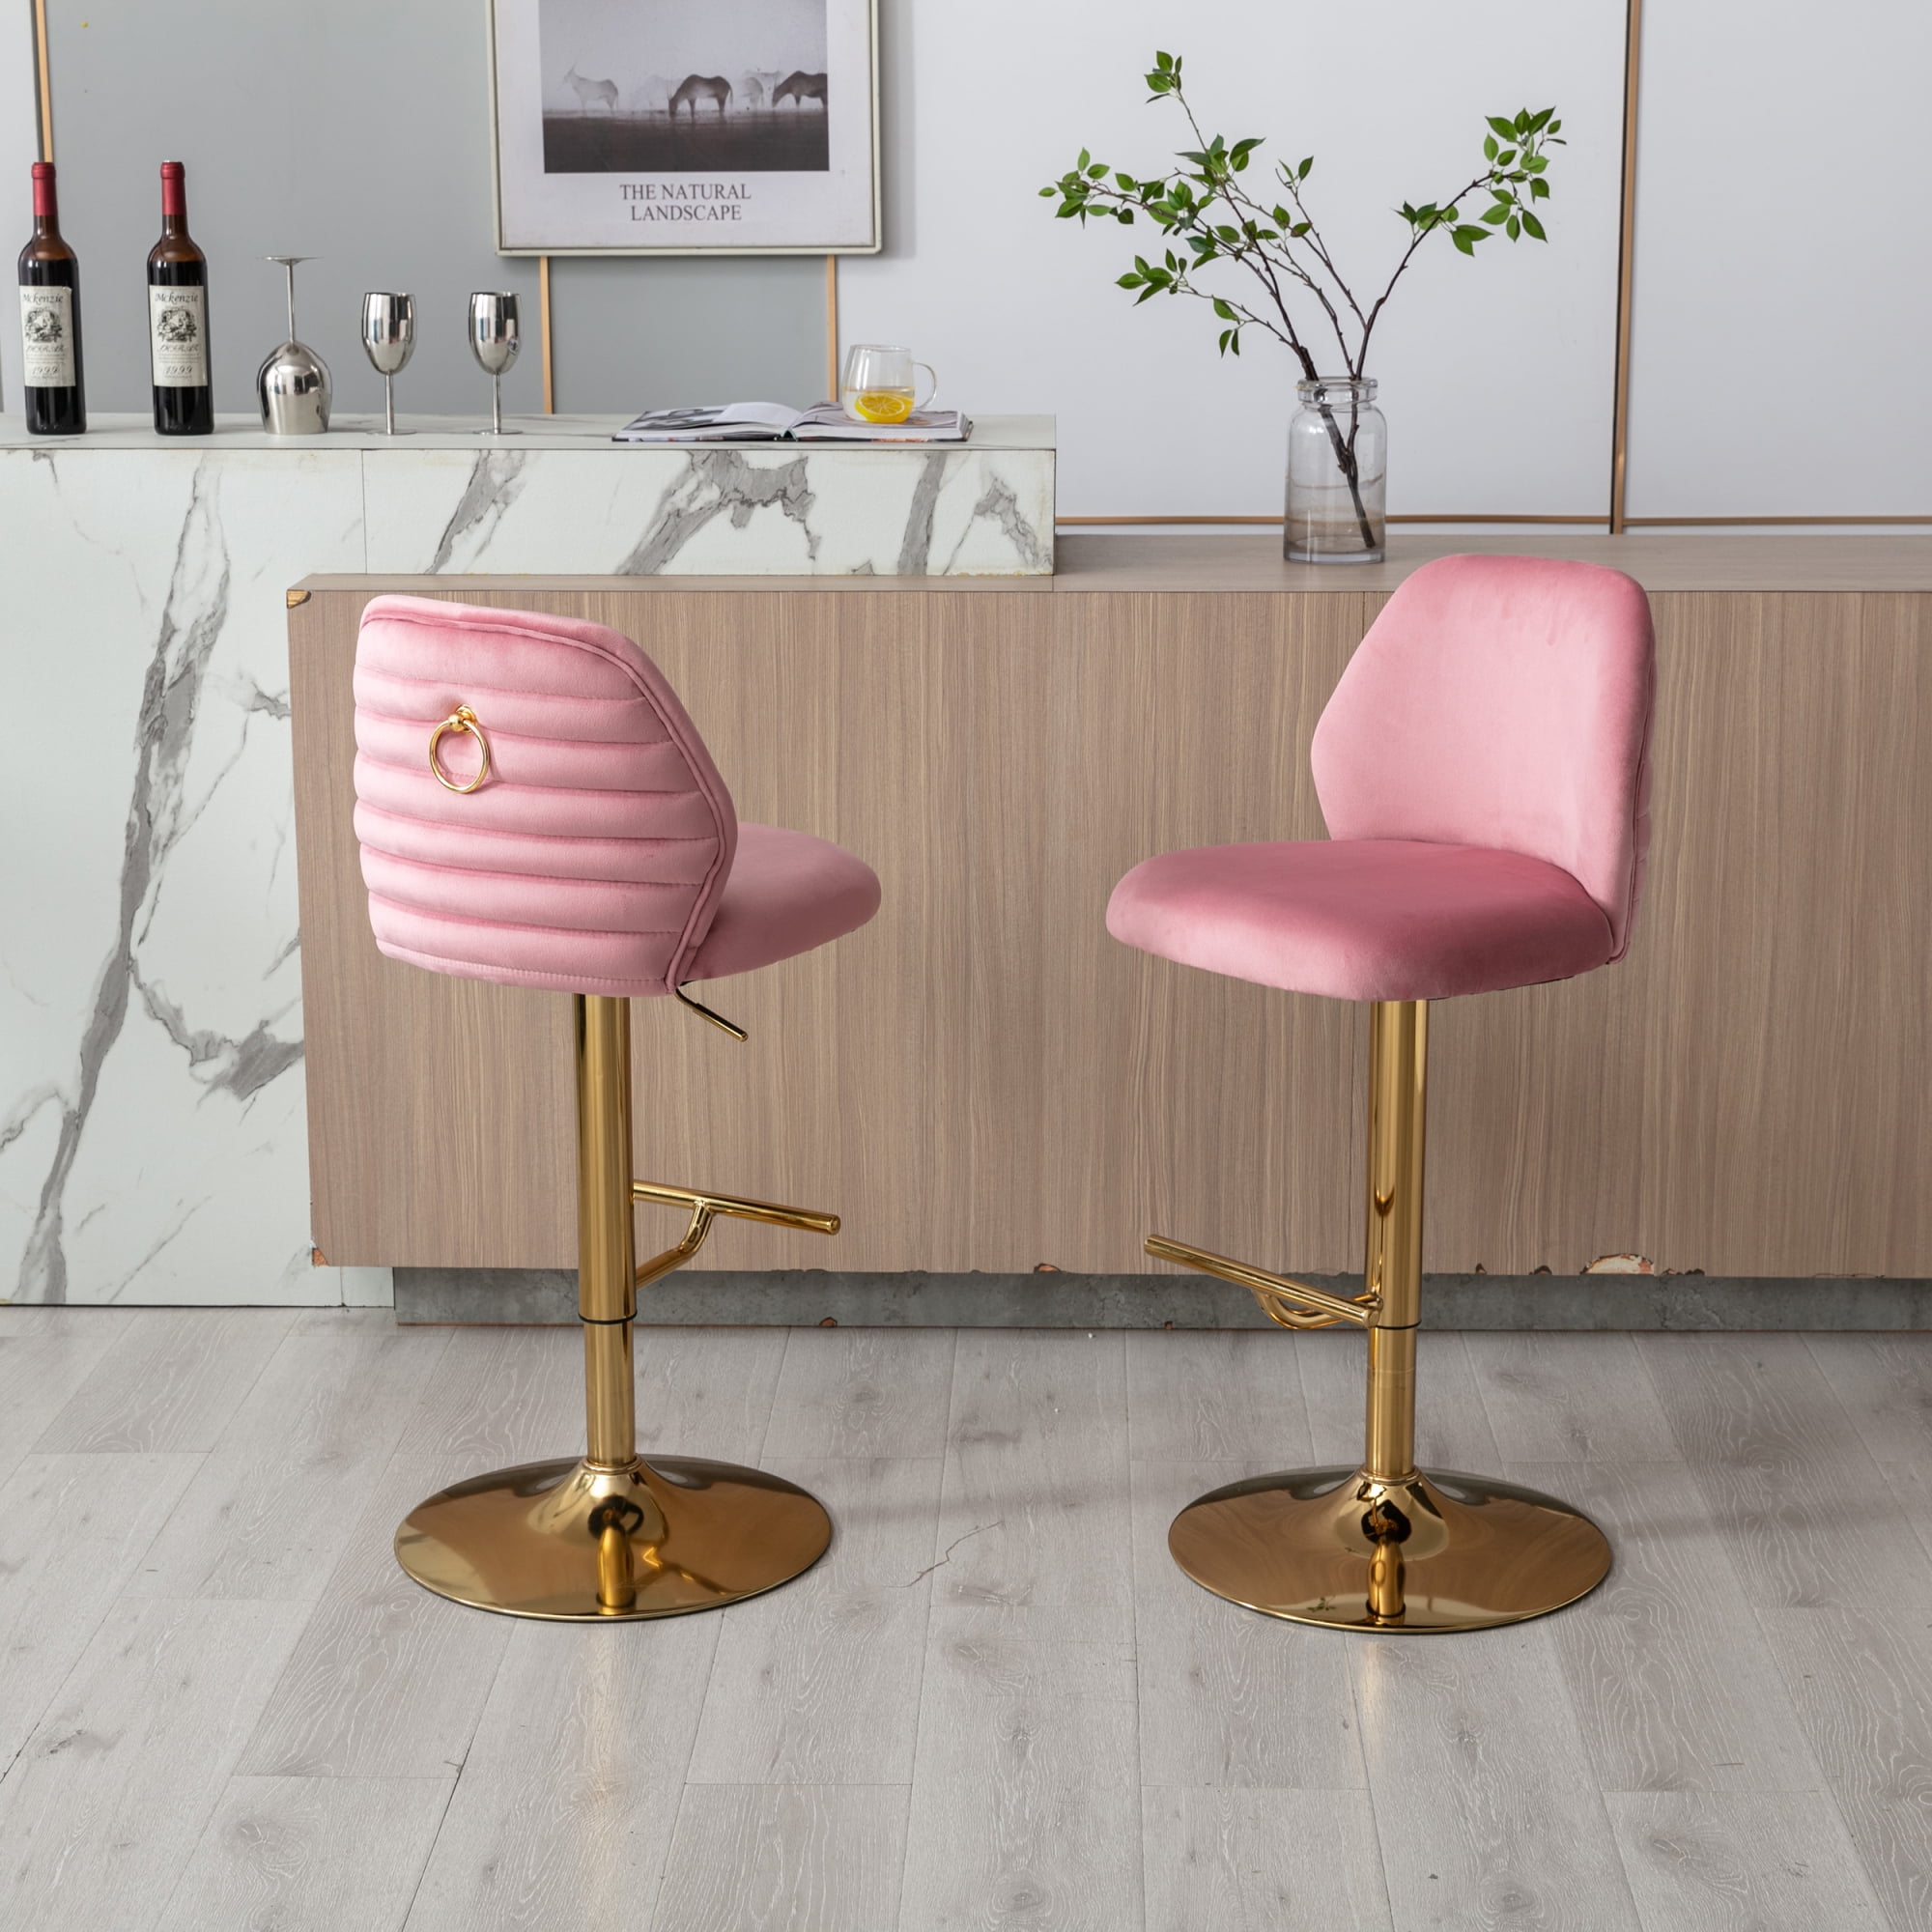 Swivel Bar Stools Chair Set of 2 Modern Adjustable Counter Height Bar ...